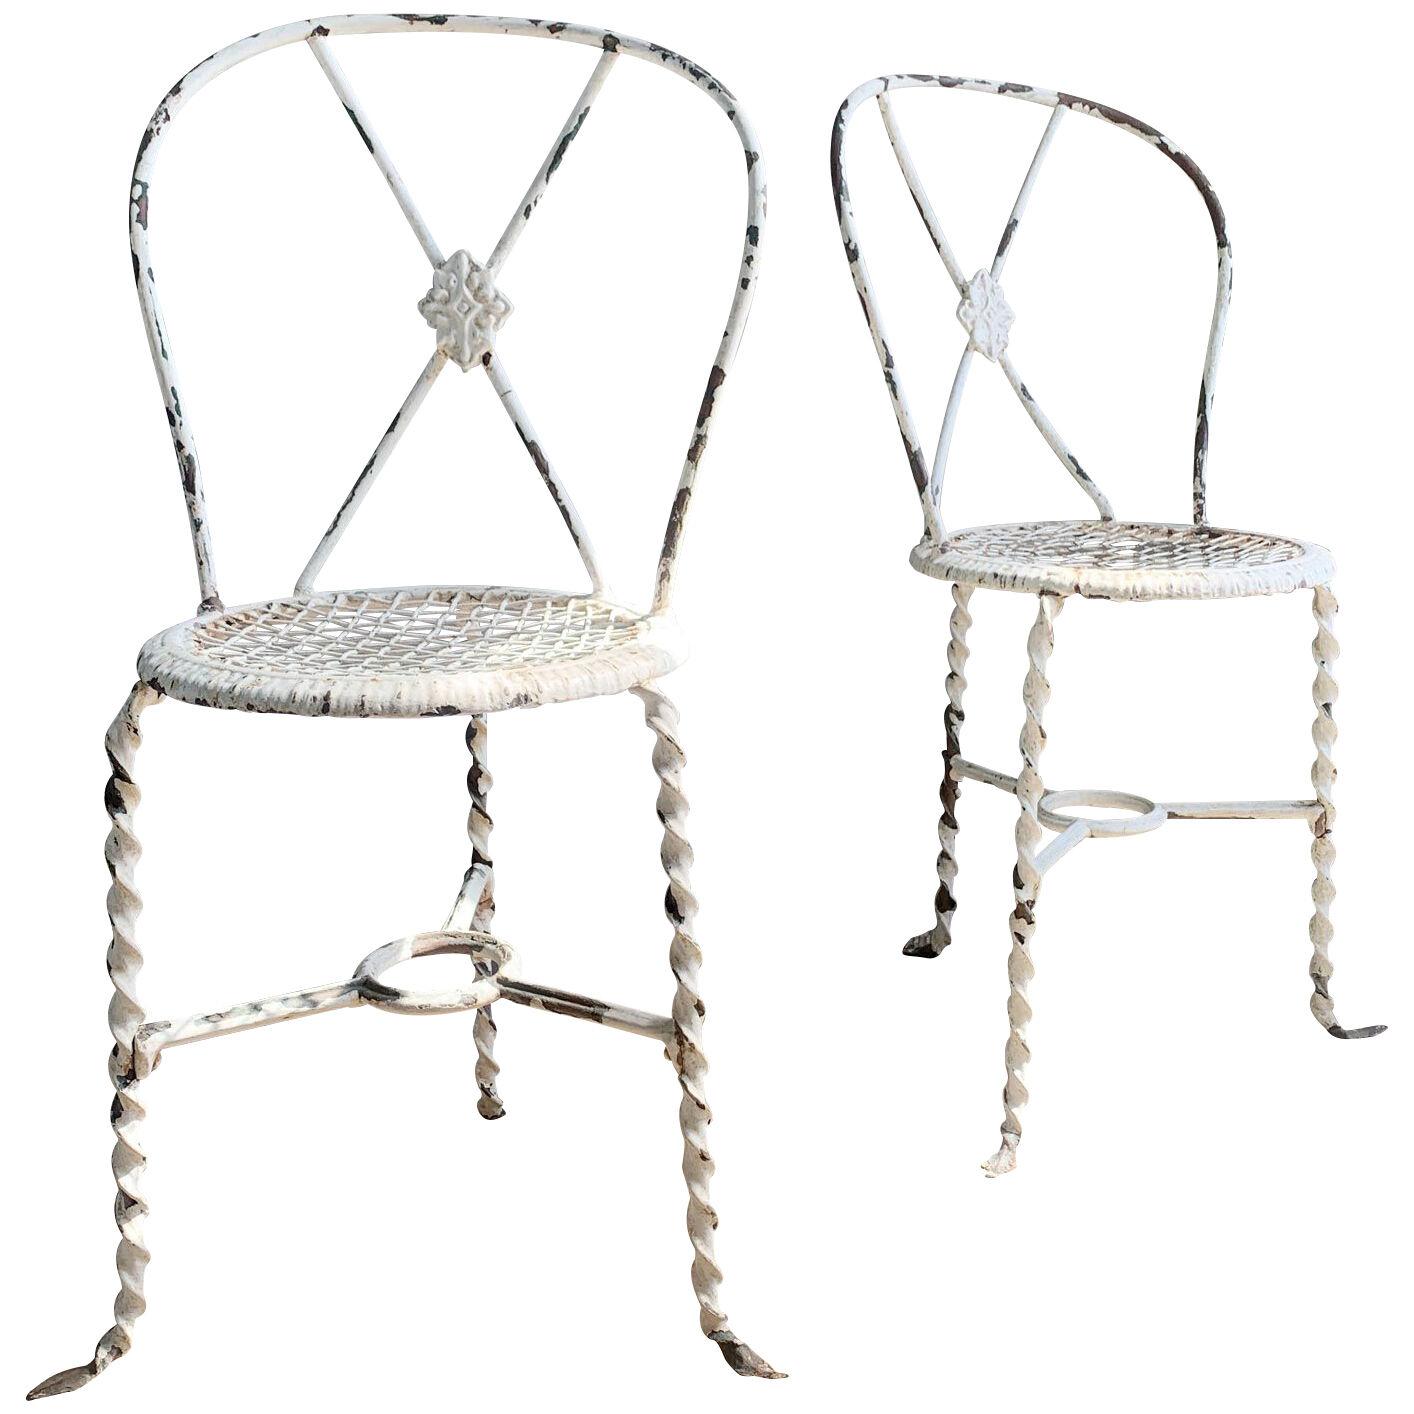 Superb pair of Rare Tri-Legged Regency Wrought Iron Chairs